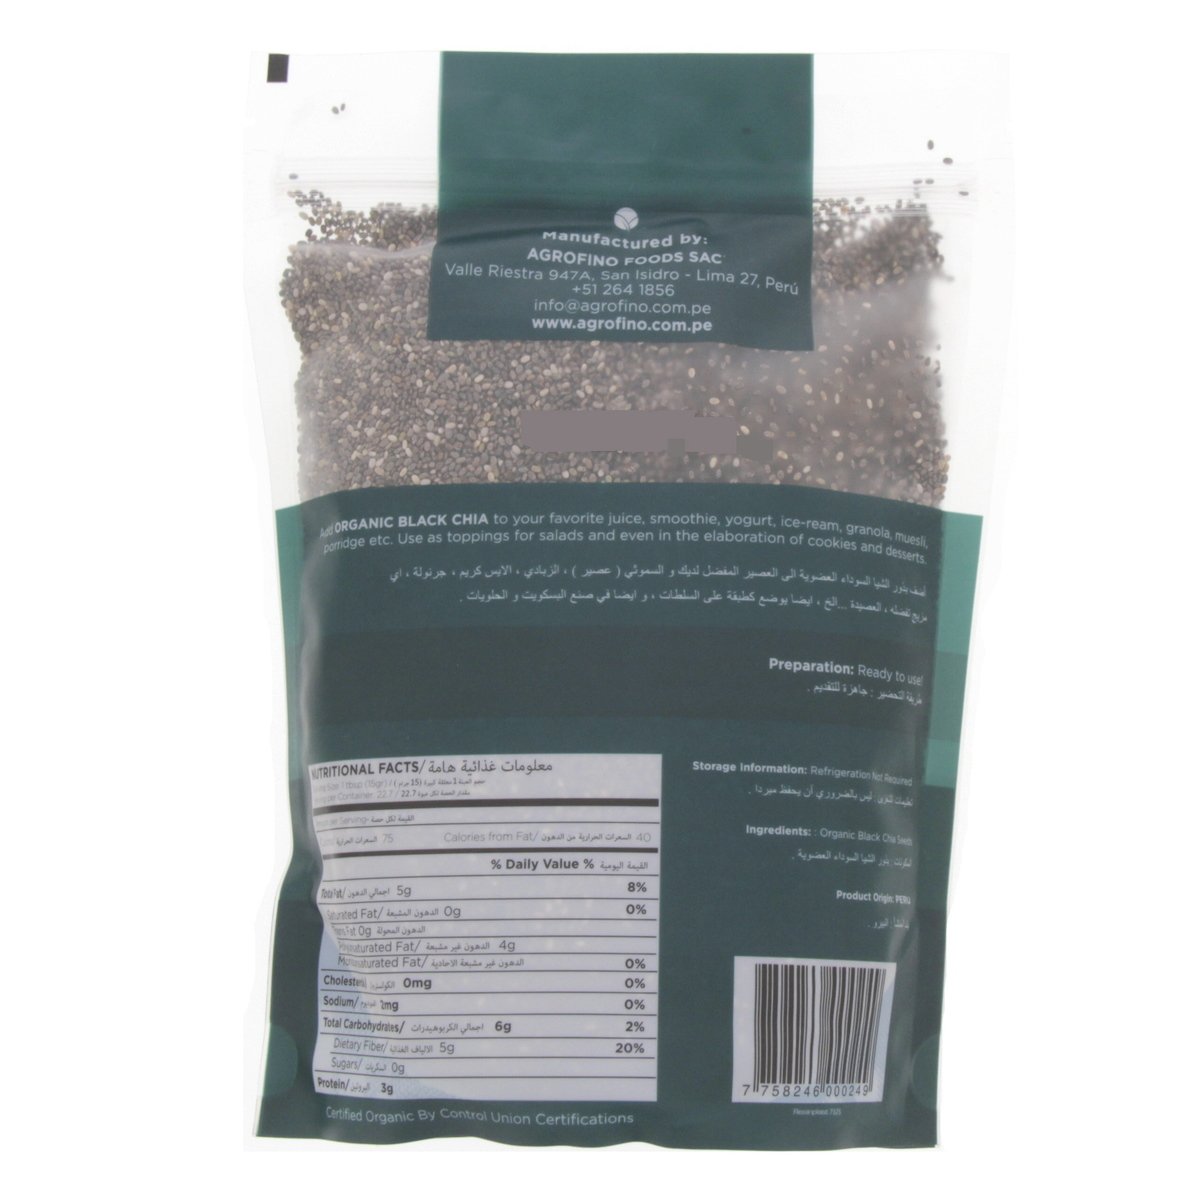 Agrofino Organic Black Chia Seeds 340 g